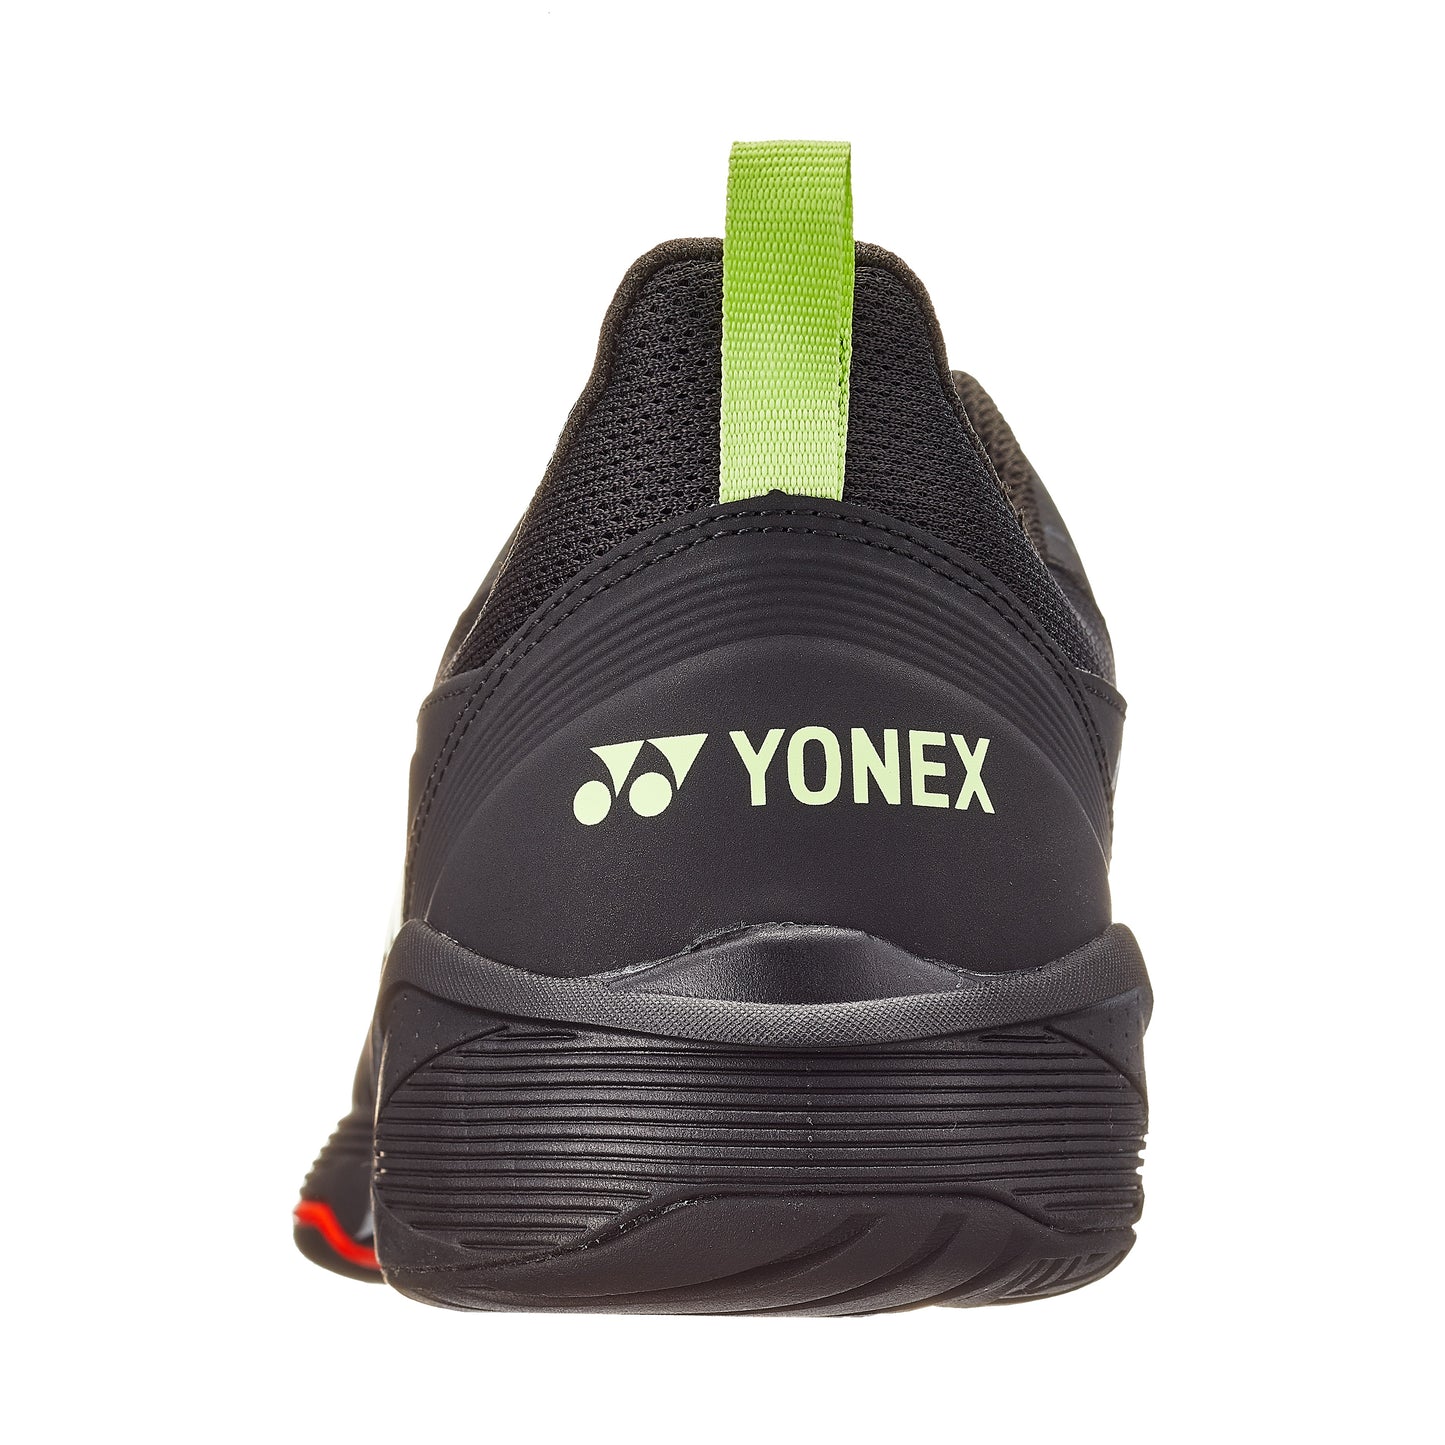 Yonex Sonicage 3 Unisex Power Cushion Tennis Shoes - Best Price online Prokicksports.com